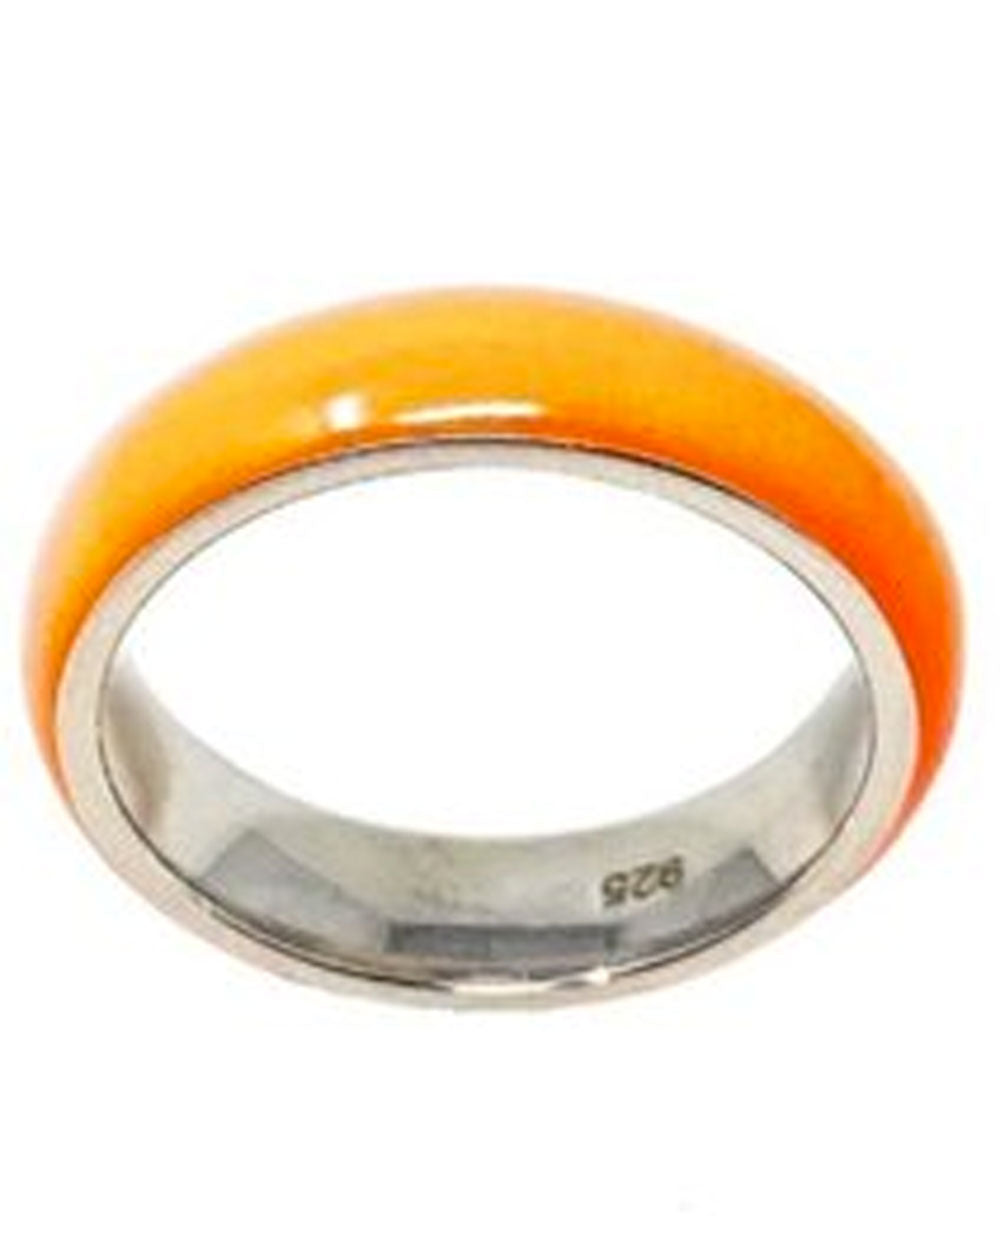 Neon Enamel and Silver Ring in Neon Orange